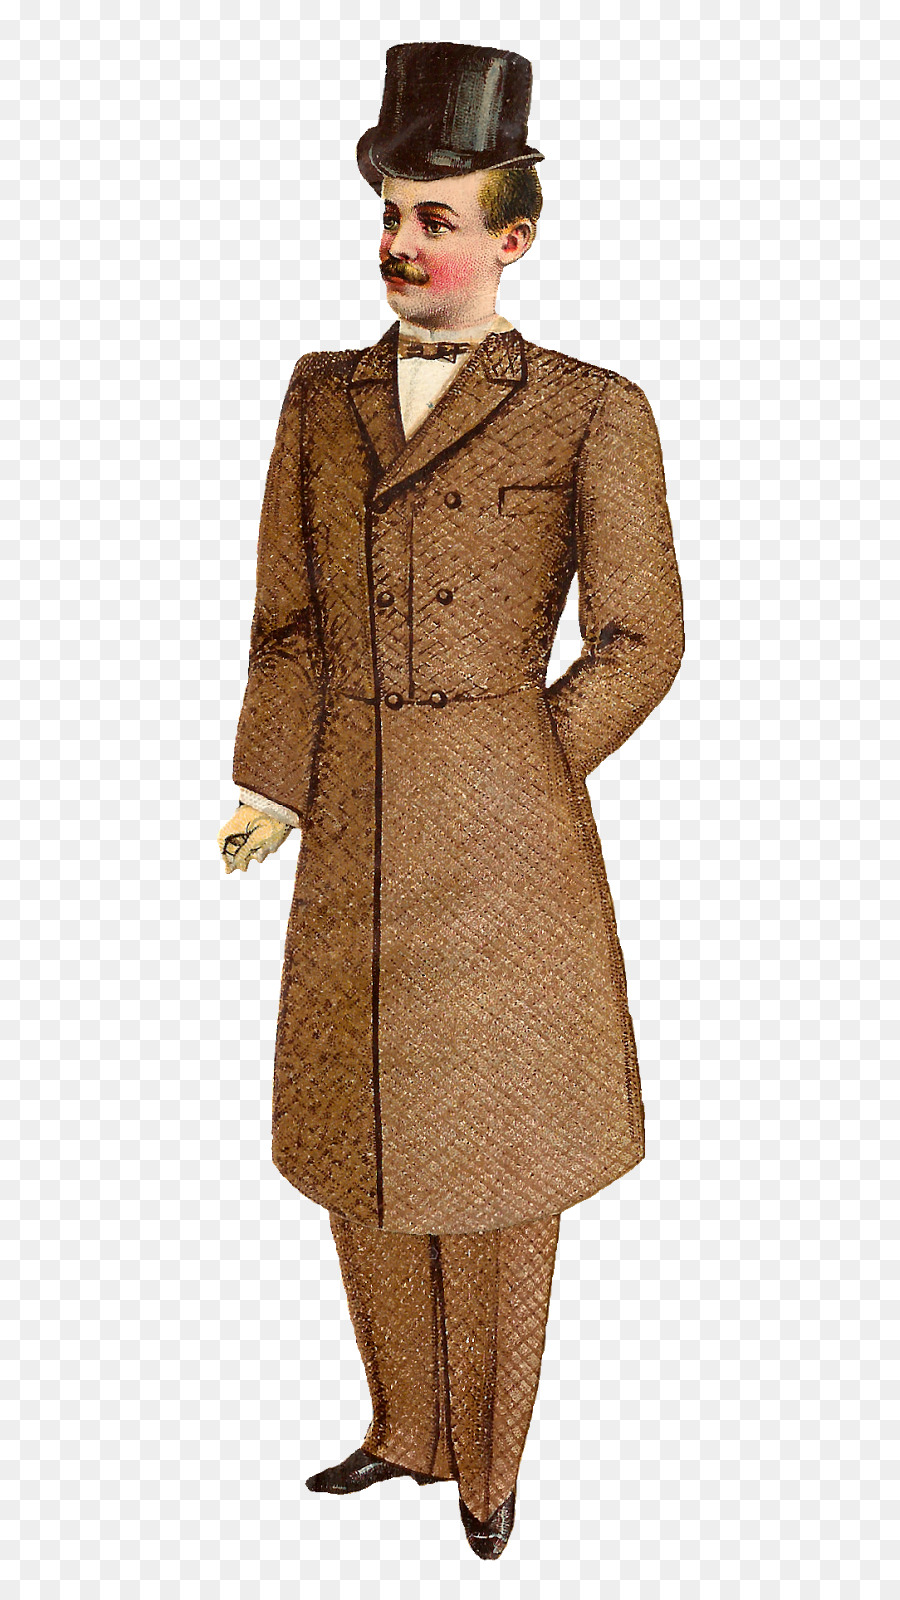 Viktorianischen ära Anzug Kleidung Smoking Clip-art - stilvolle Mann